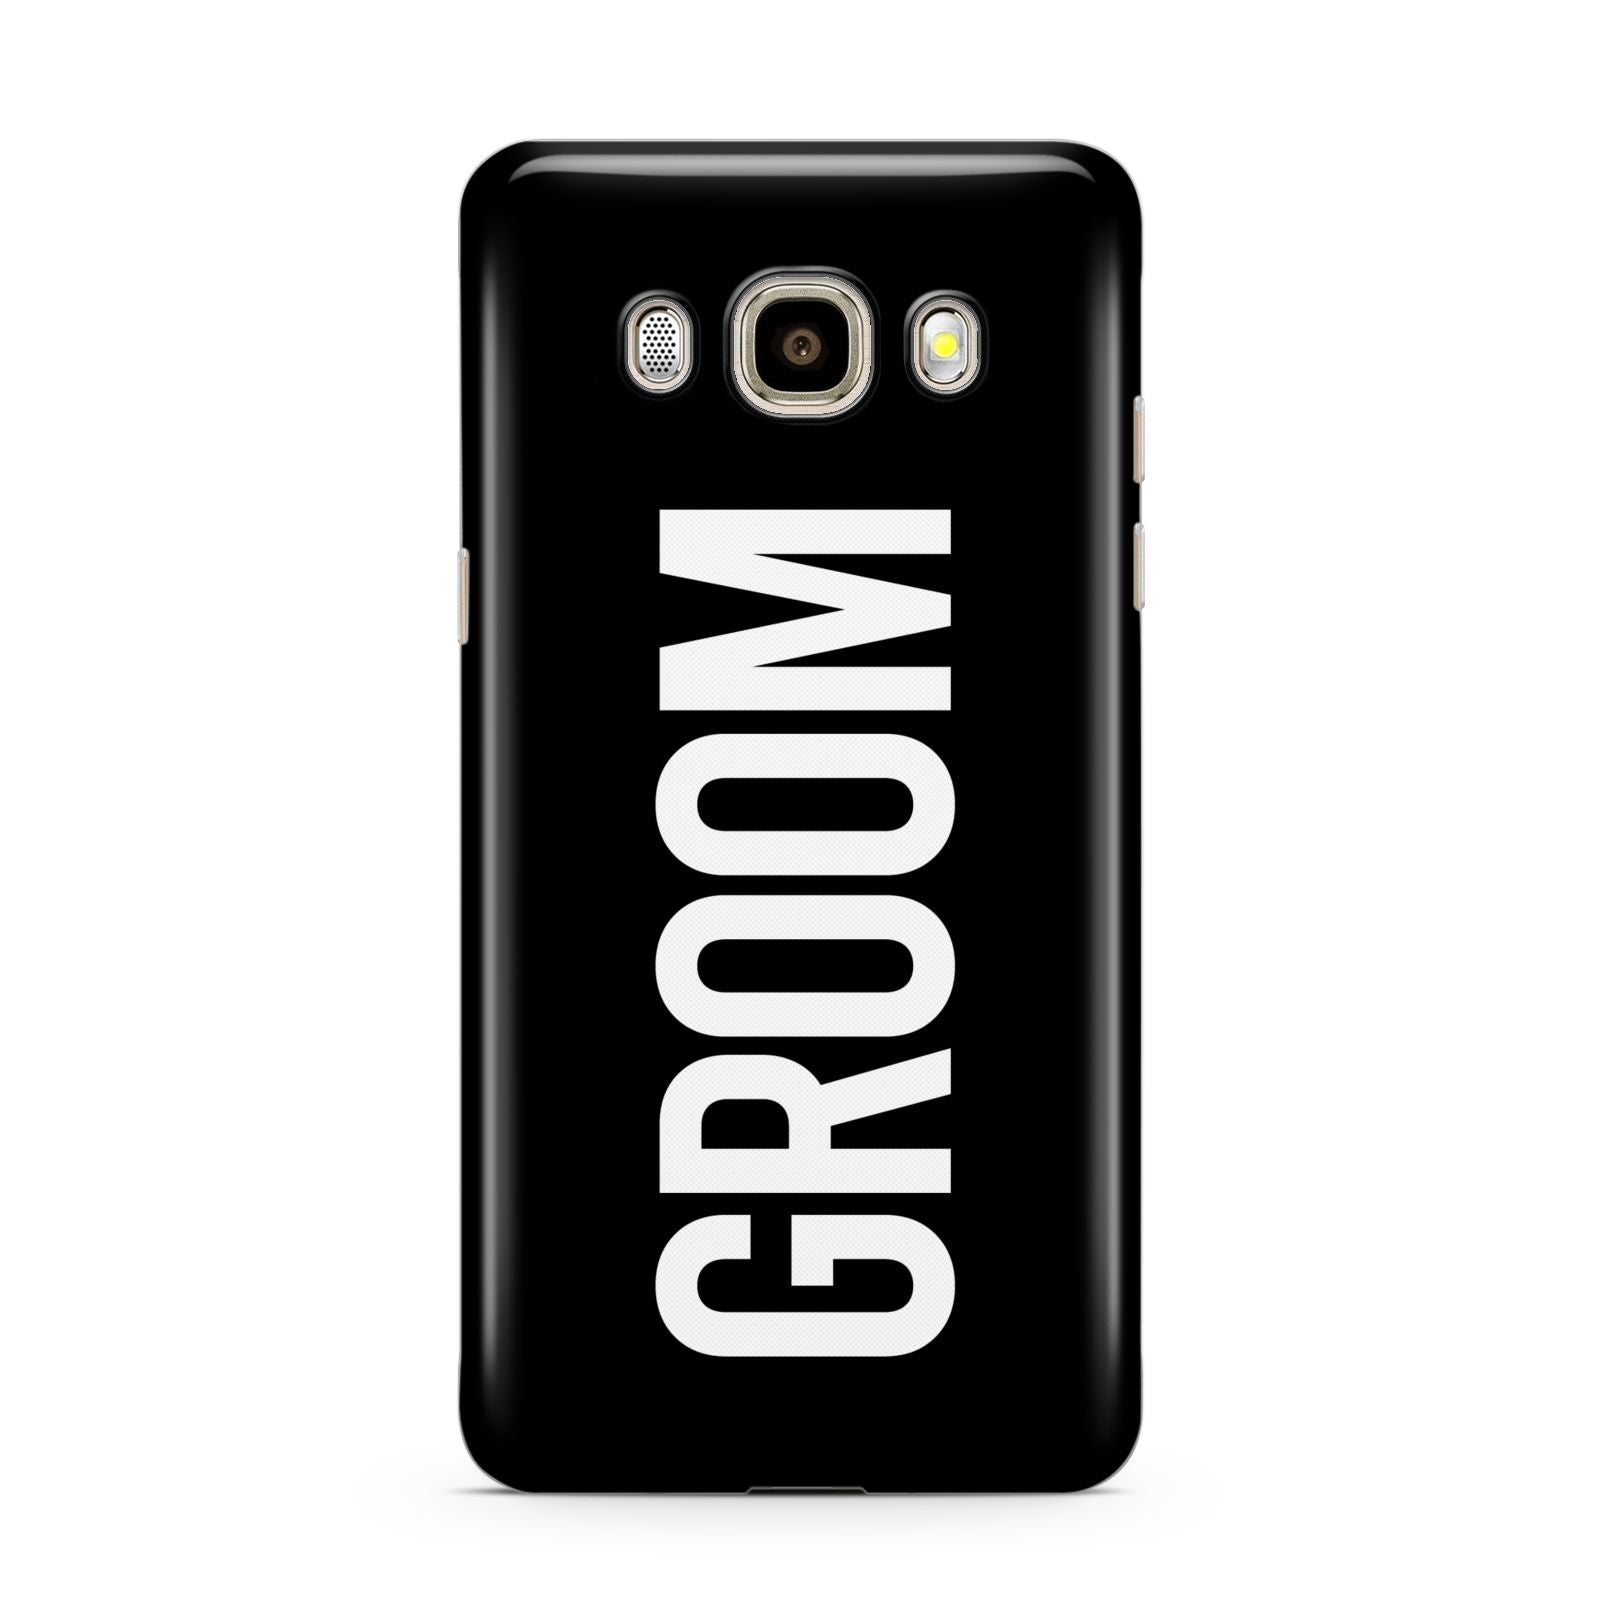 Groom Samsung Galaxy J7 2016 Case on gold phone